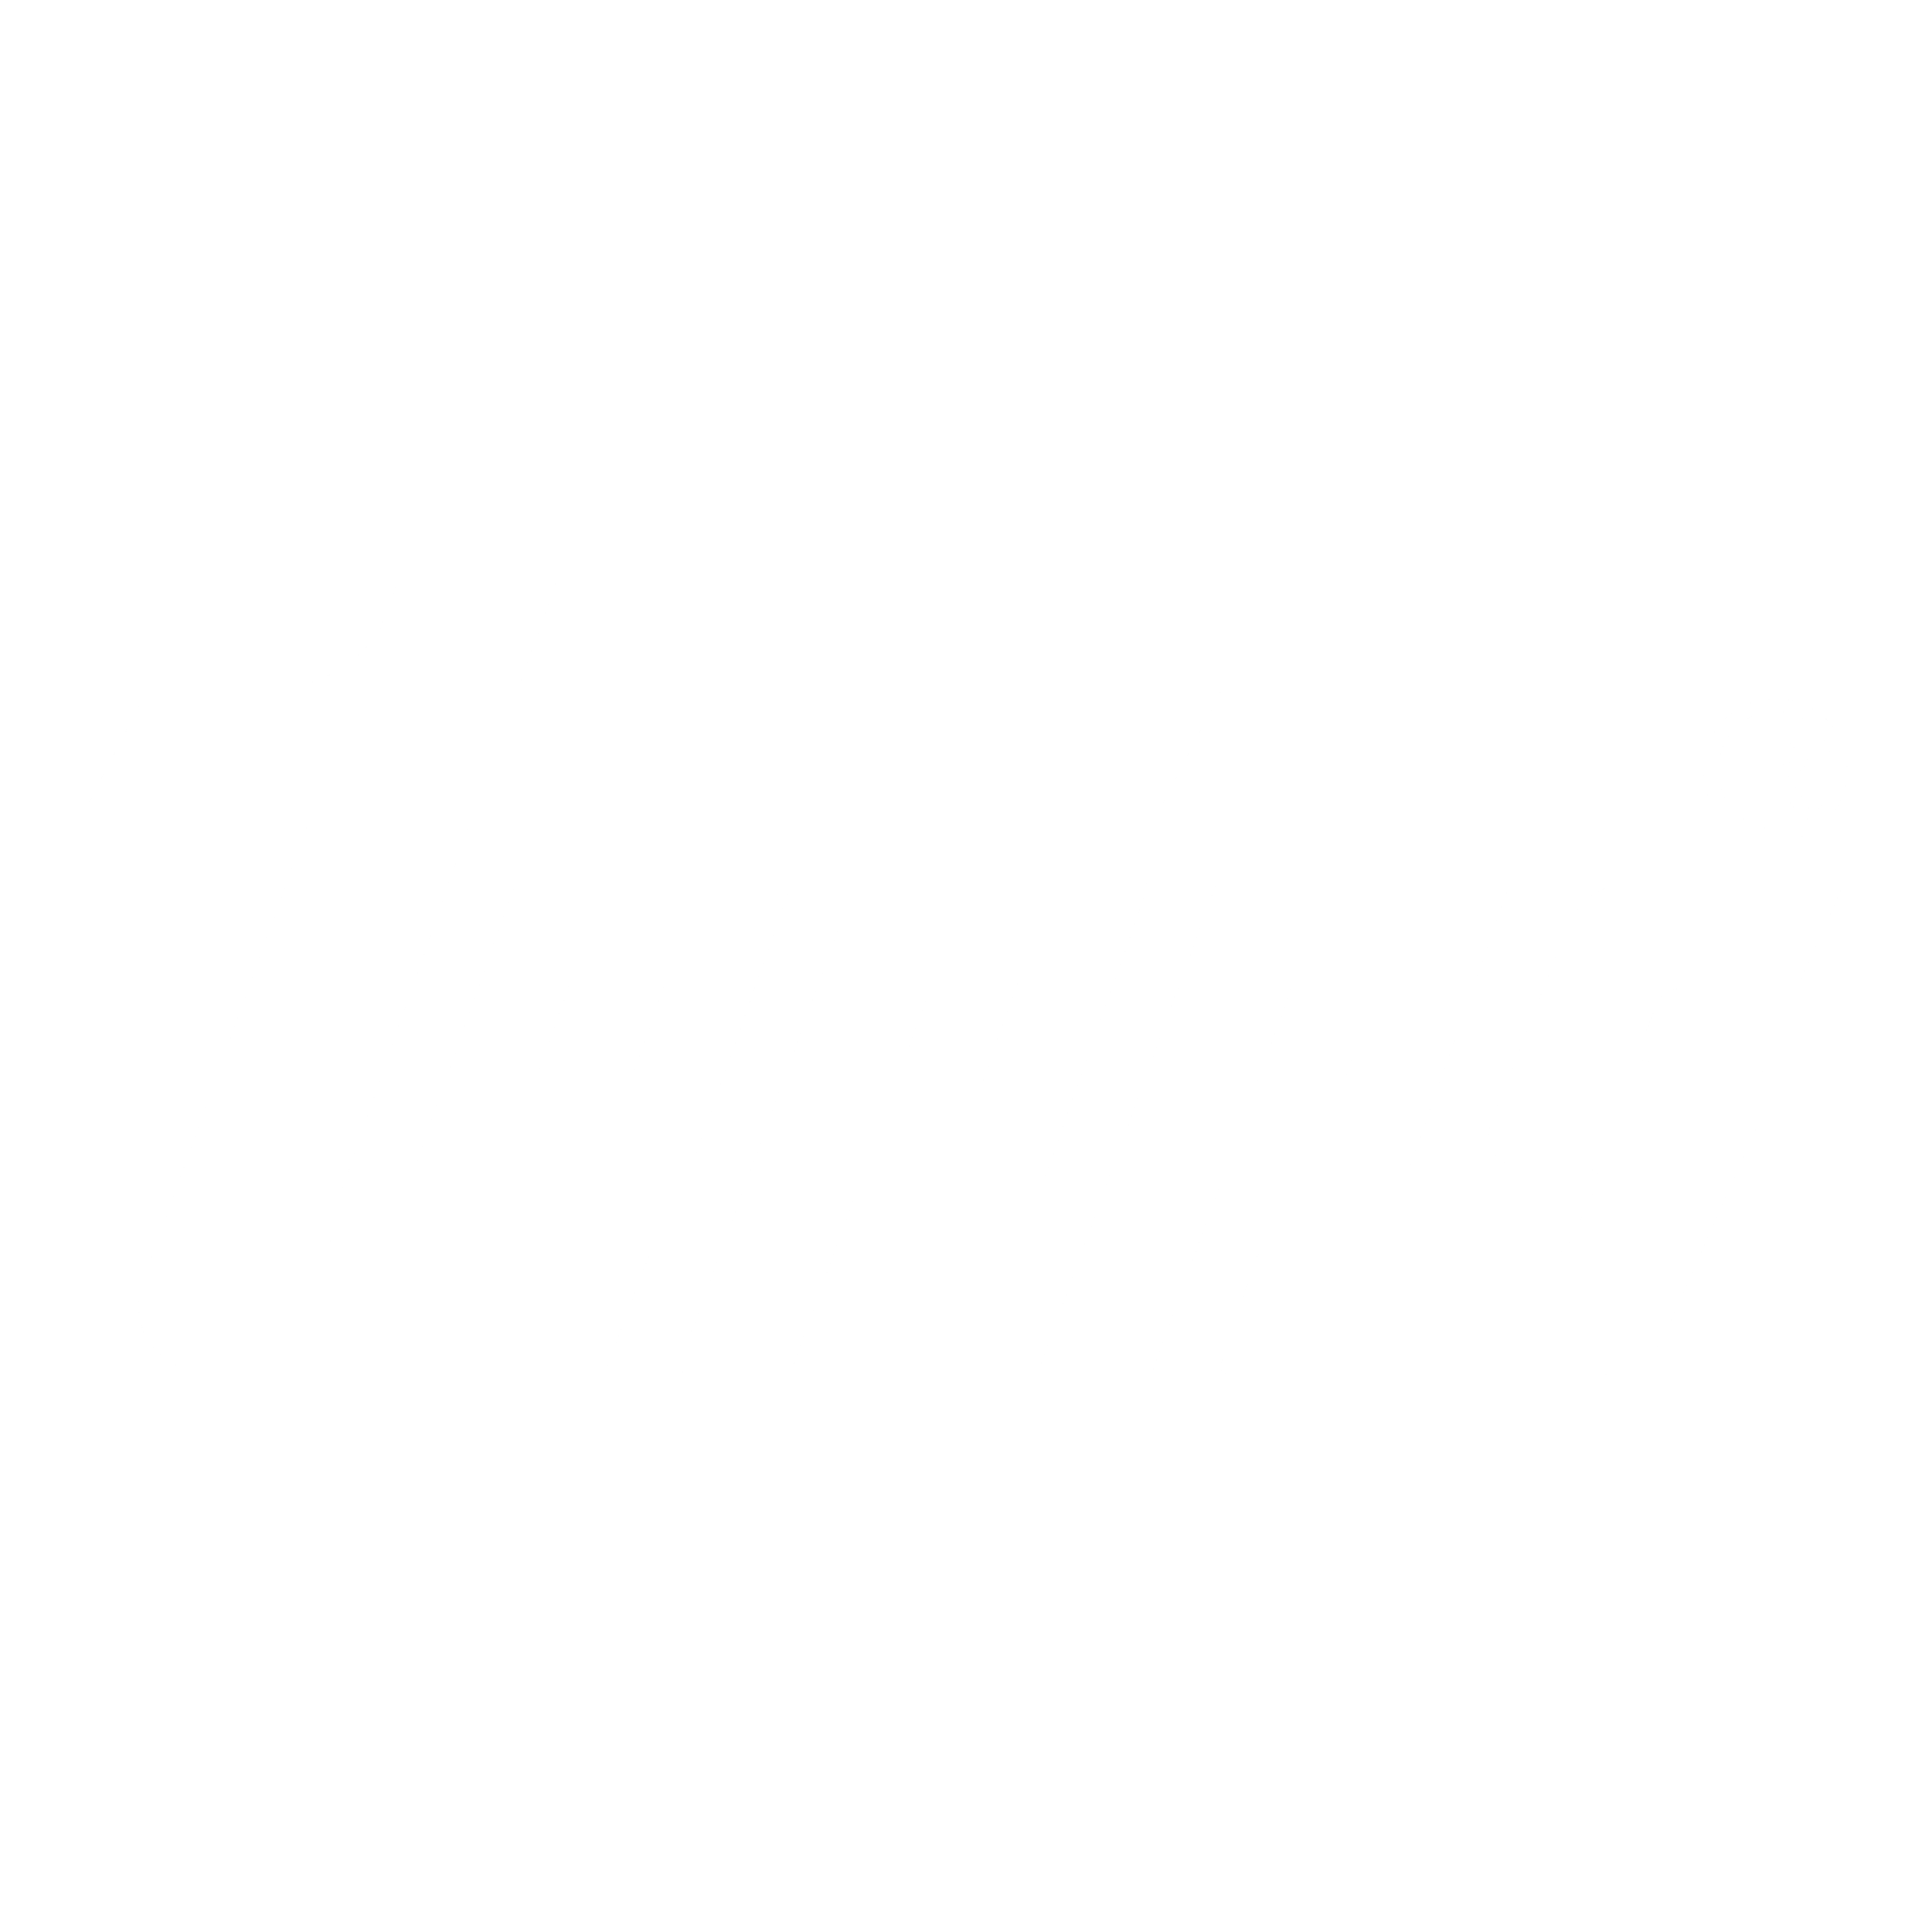 Topps Logo - Topps Logo PNG Transparent & SVG Vector - Freebie Supply